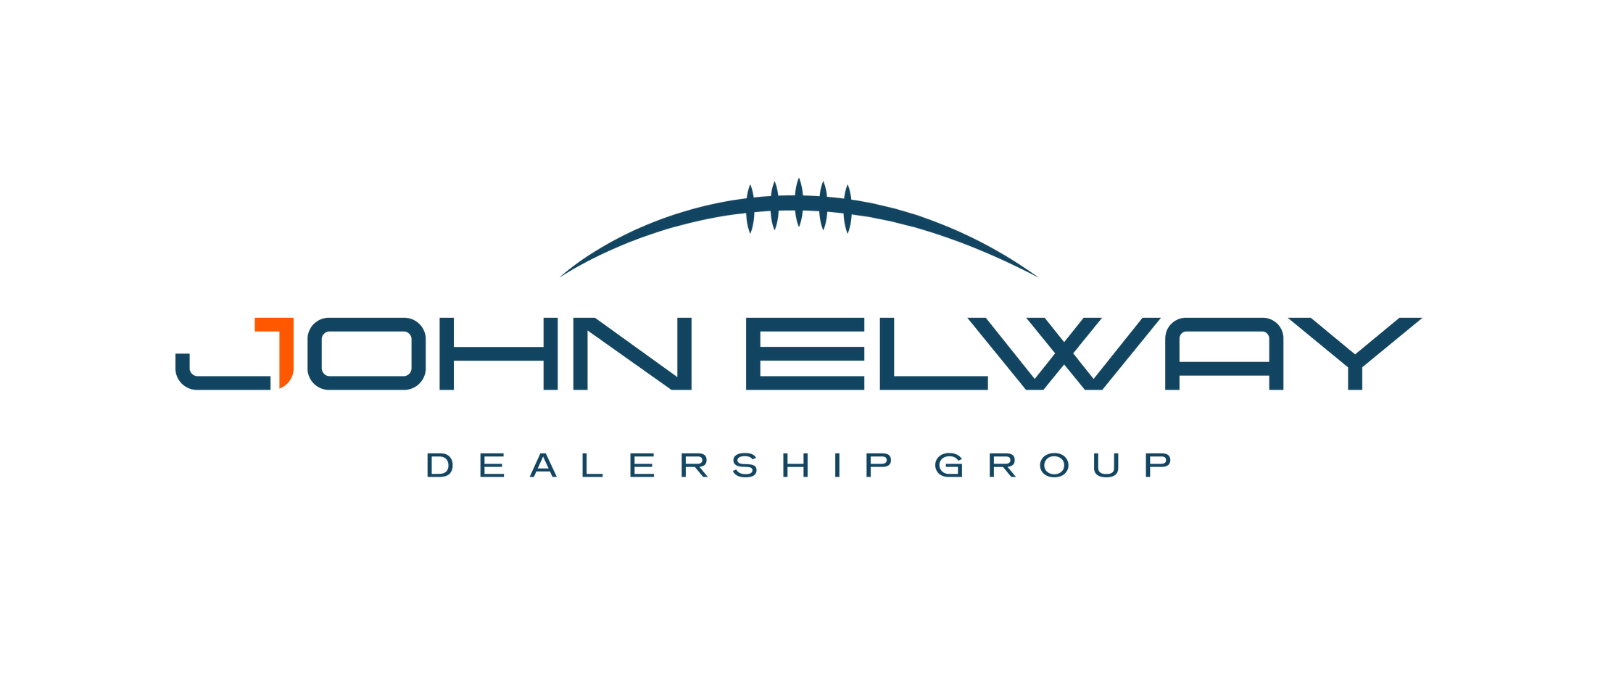 John Elway Dealership Group